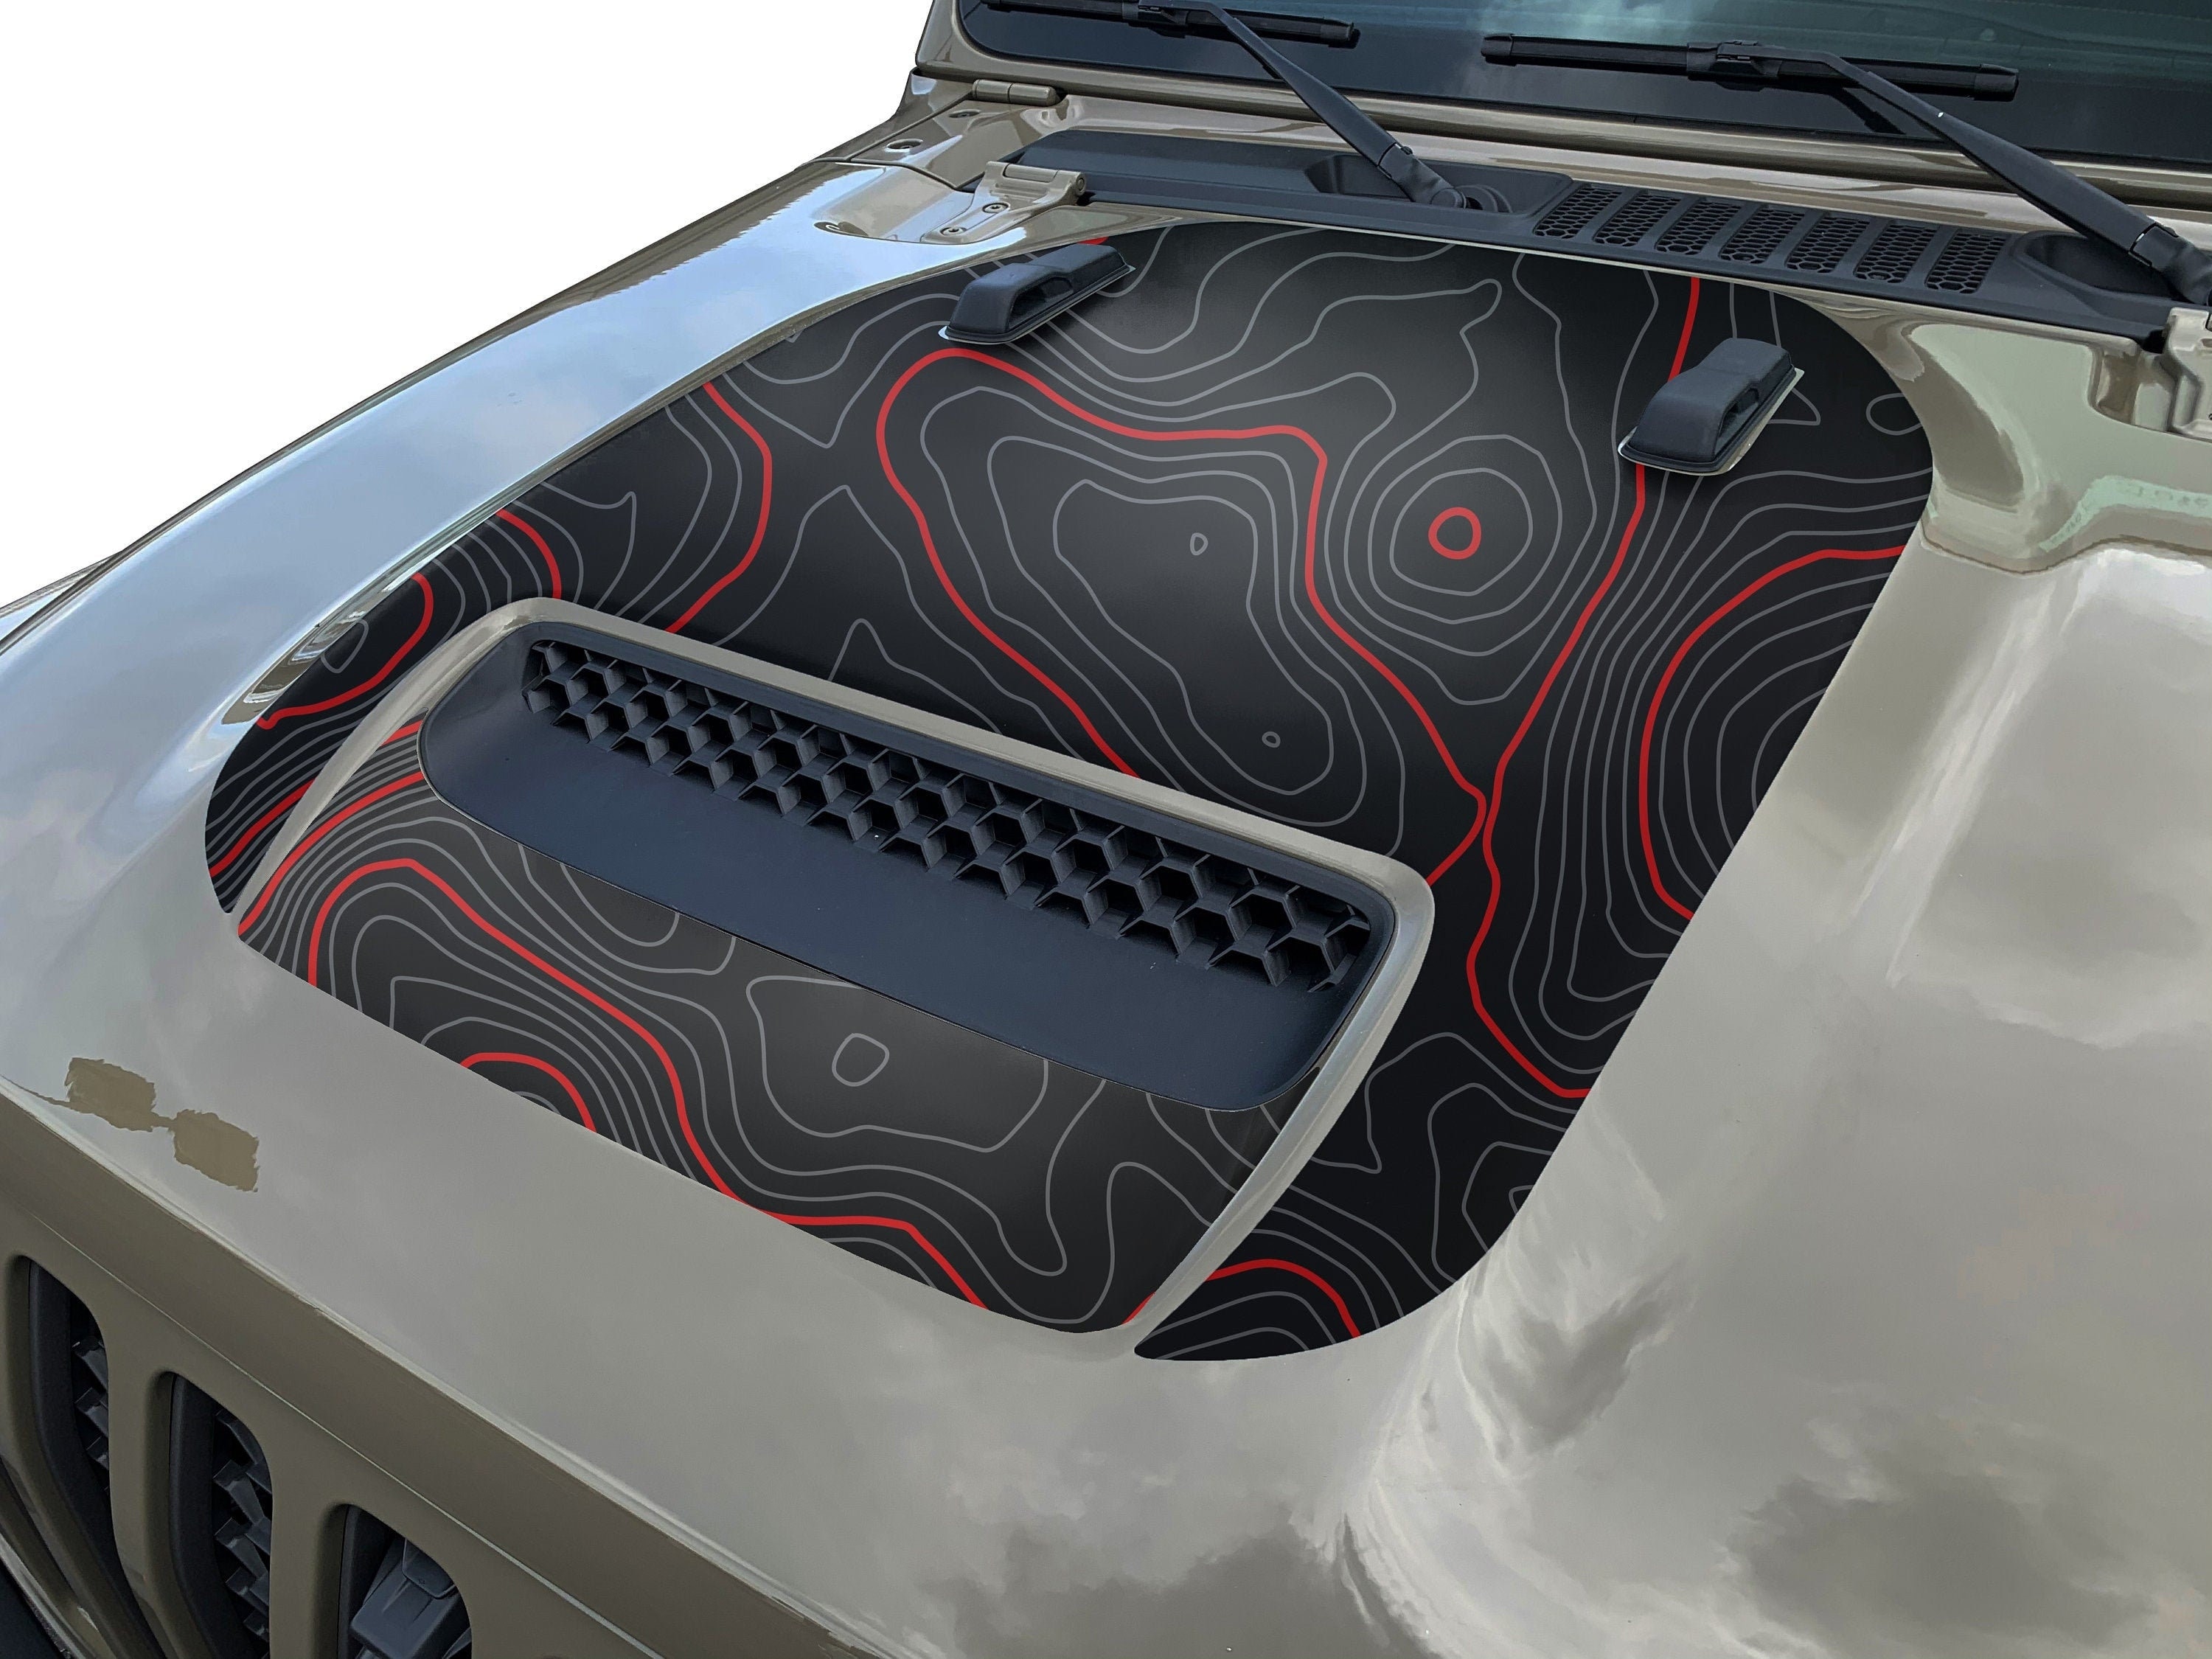 ontto Autoschlüssel Hülle Cover Passt für FIAT Jeep Compass Grand Cherokee  für Dodge Ram 1500 Charger Dart Challenger Durango Metall Schlüsselhülle